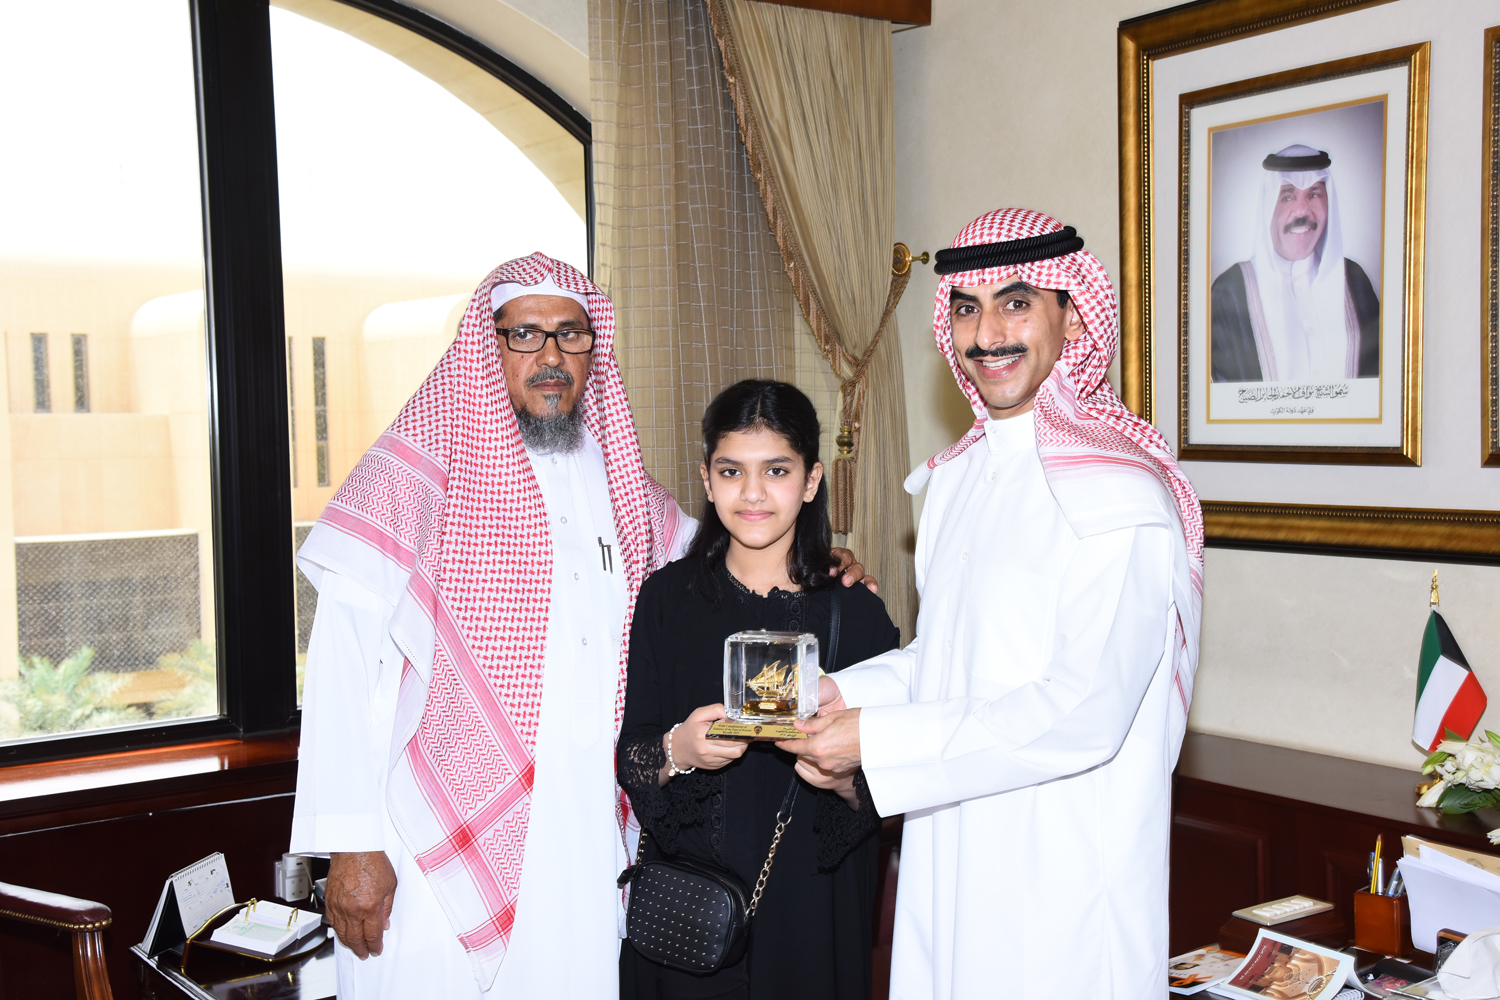 Kuwait's Ambassador to Saudi Arabia Sheikh Thamer Jaber Al-Ahmad Al-Sabah honors young girl Sharifa Mohammed Al-Hagbani